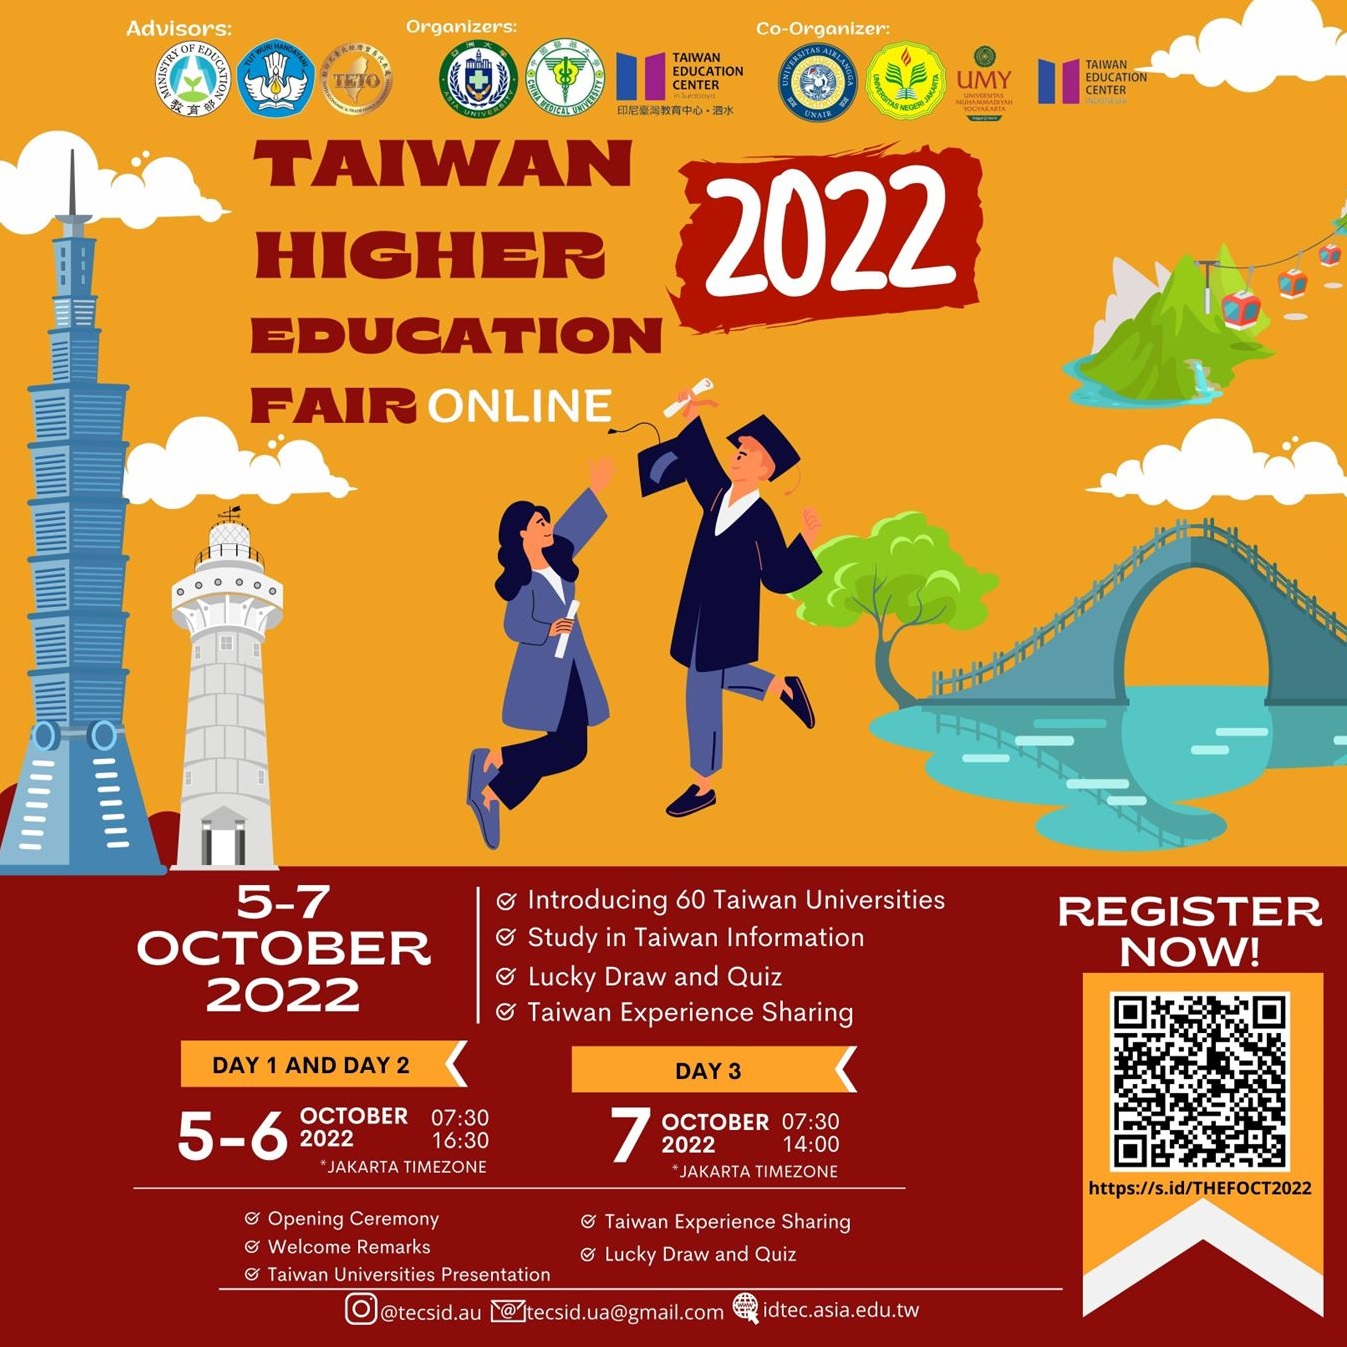 Taiwan Higher Education Fair Online 2022